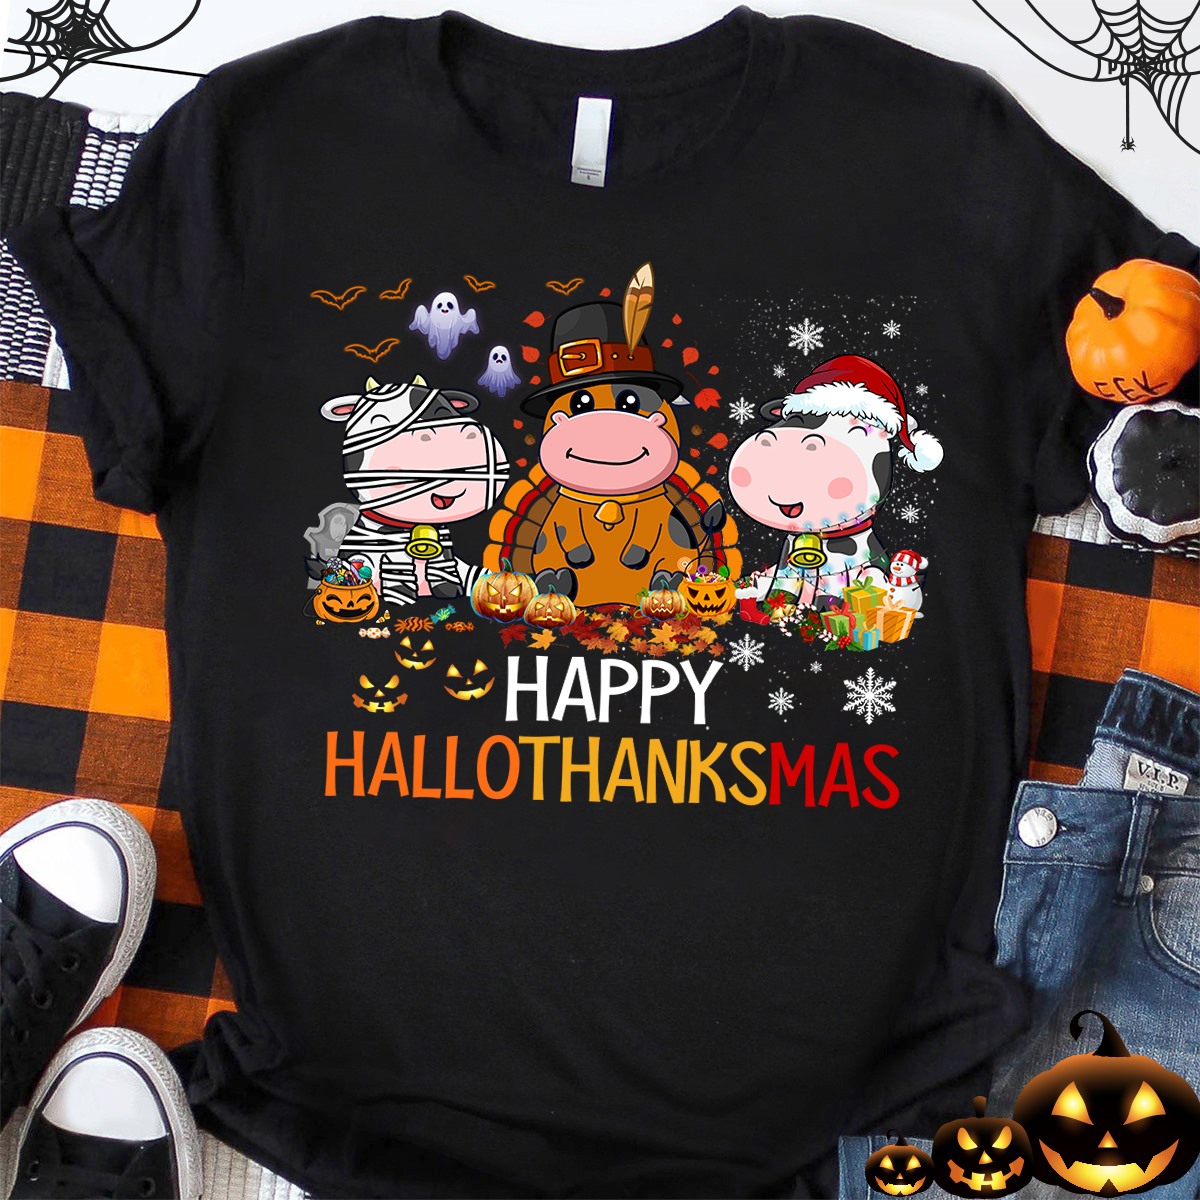 Happy HalloThanksMas - Funny cow graphic T-shirt, Halloween cow costume